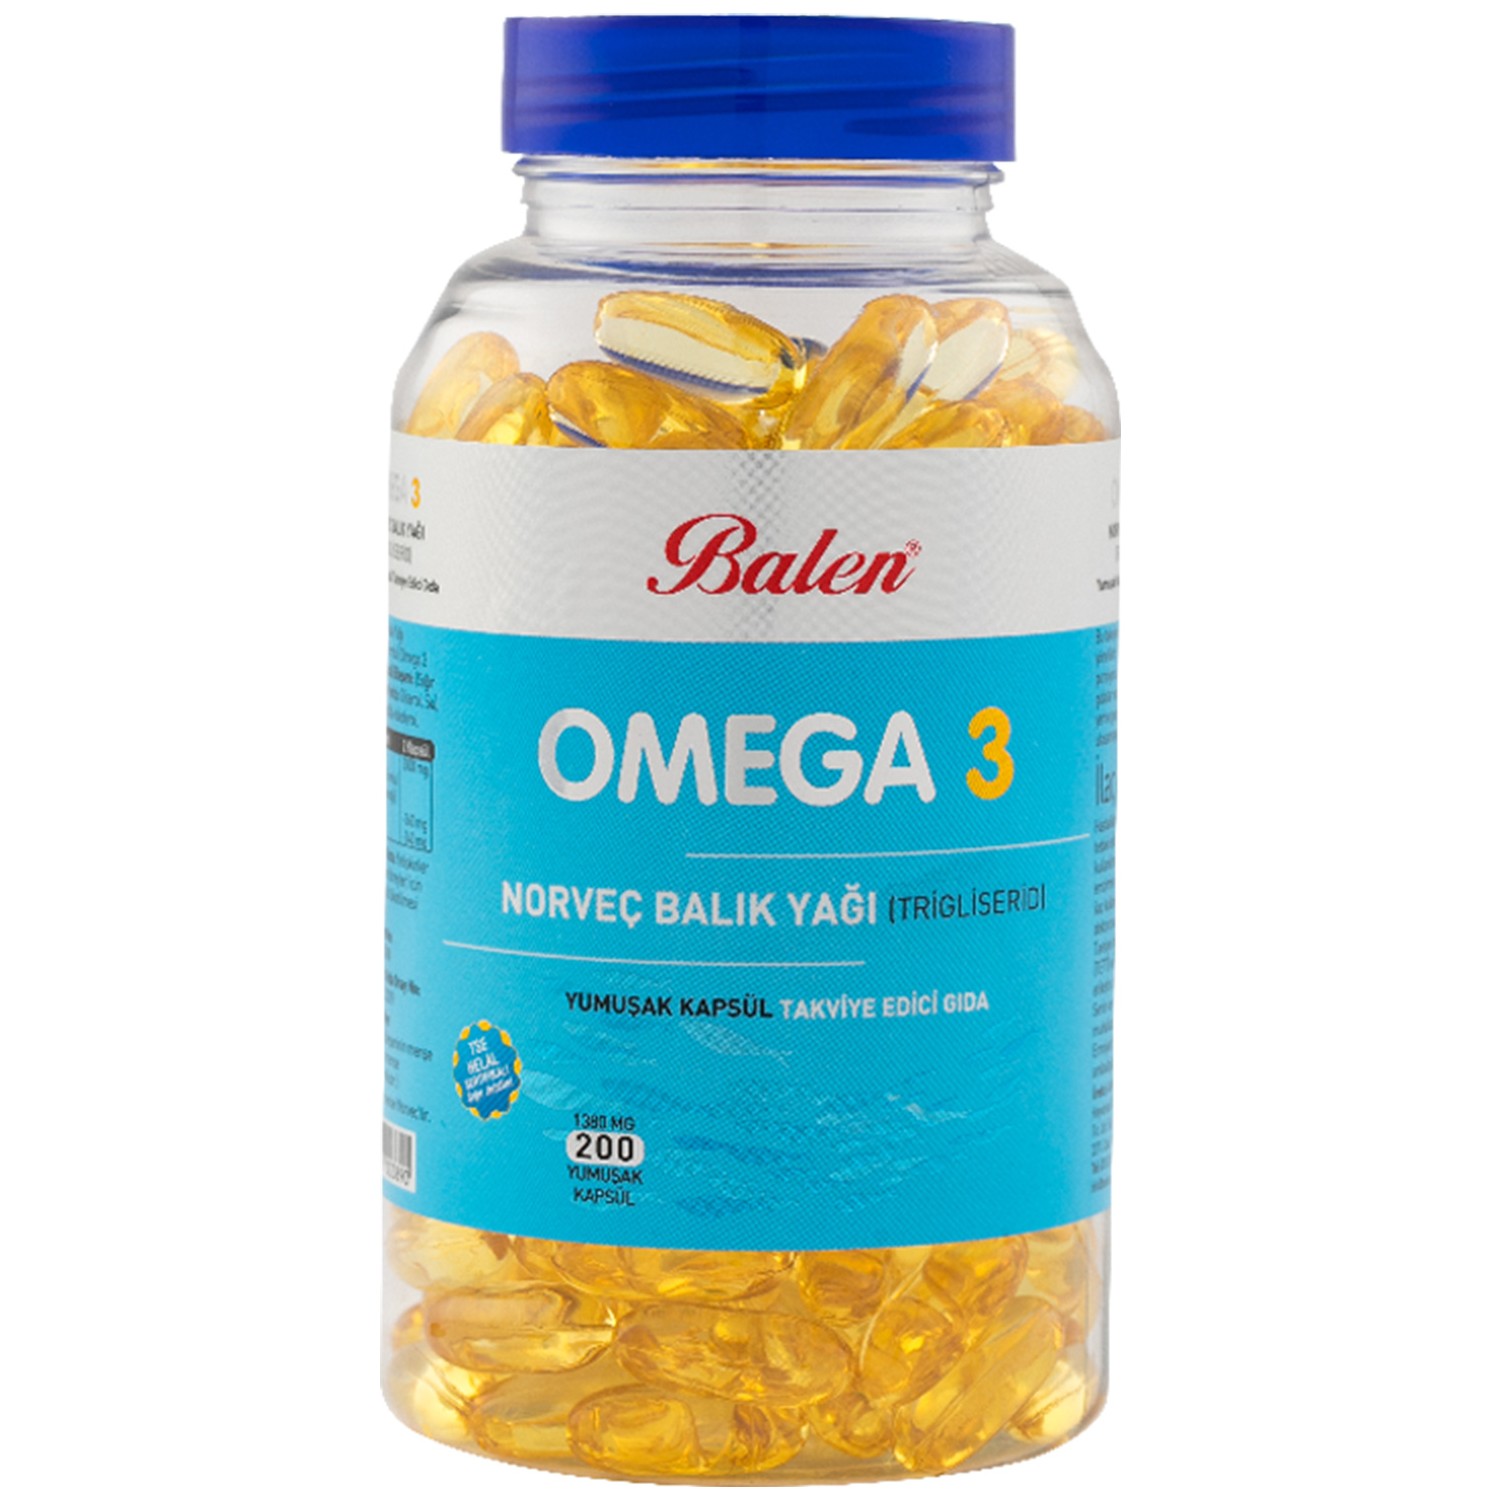 Норвежский рыбий жир Balen Omega-3 (триглицерид) 1380 мг, 200 капсул omega seamaster aqua terra 22010412101001